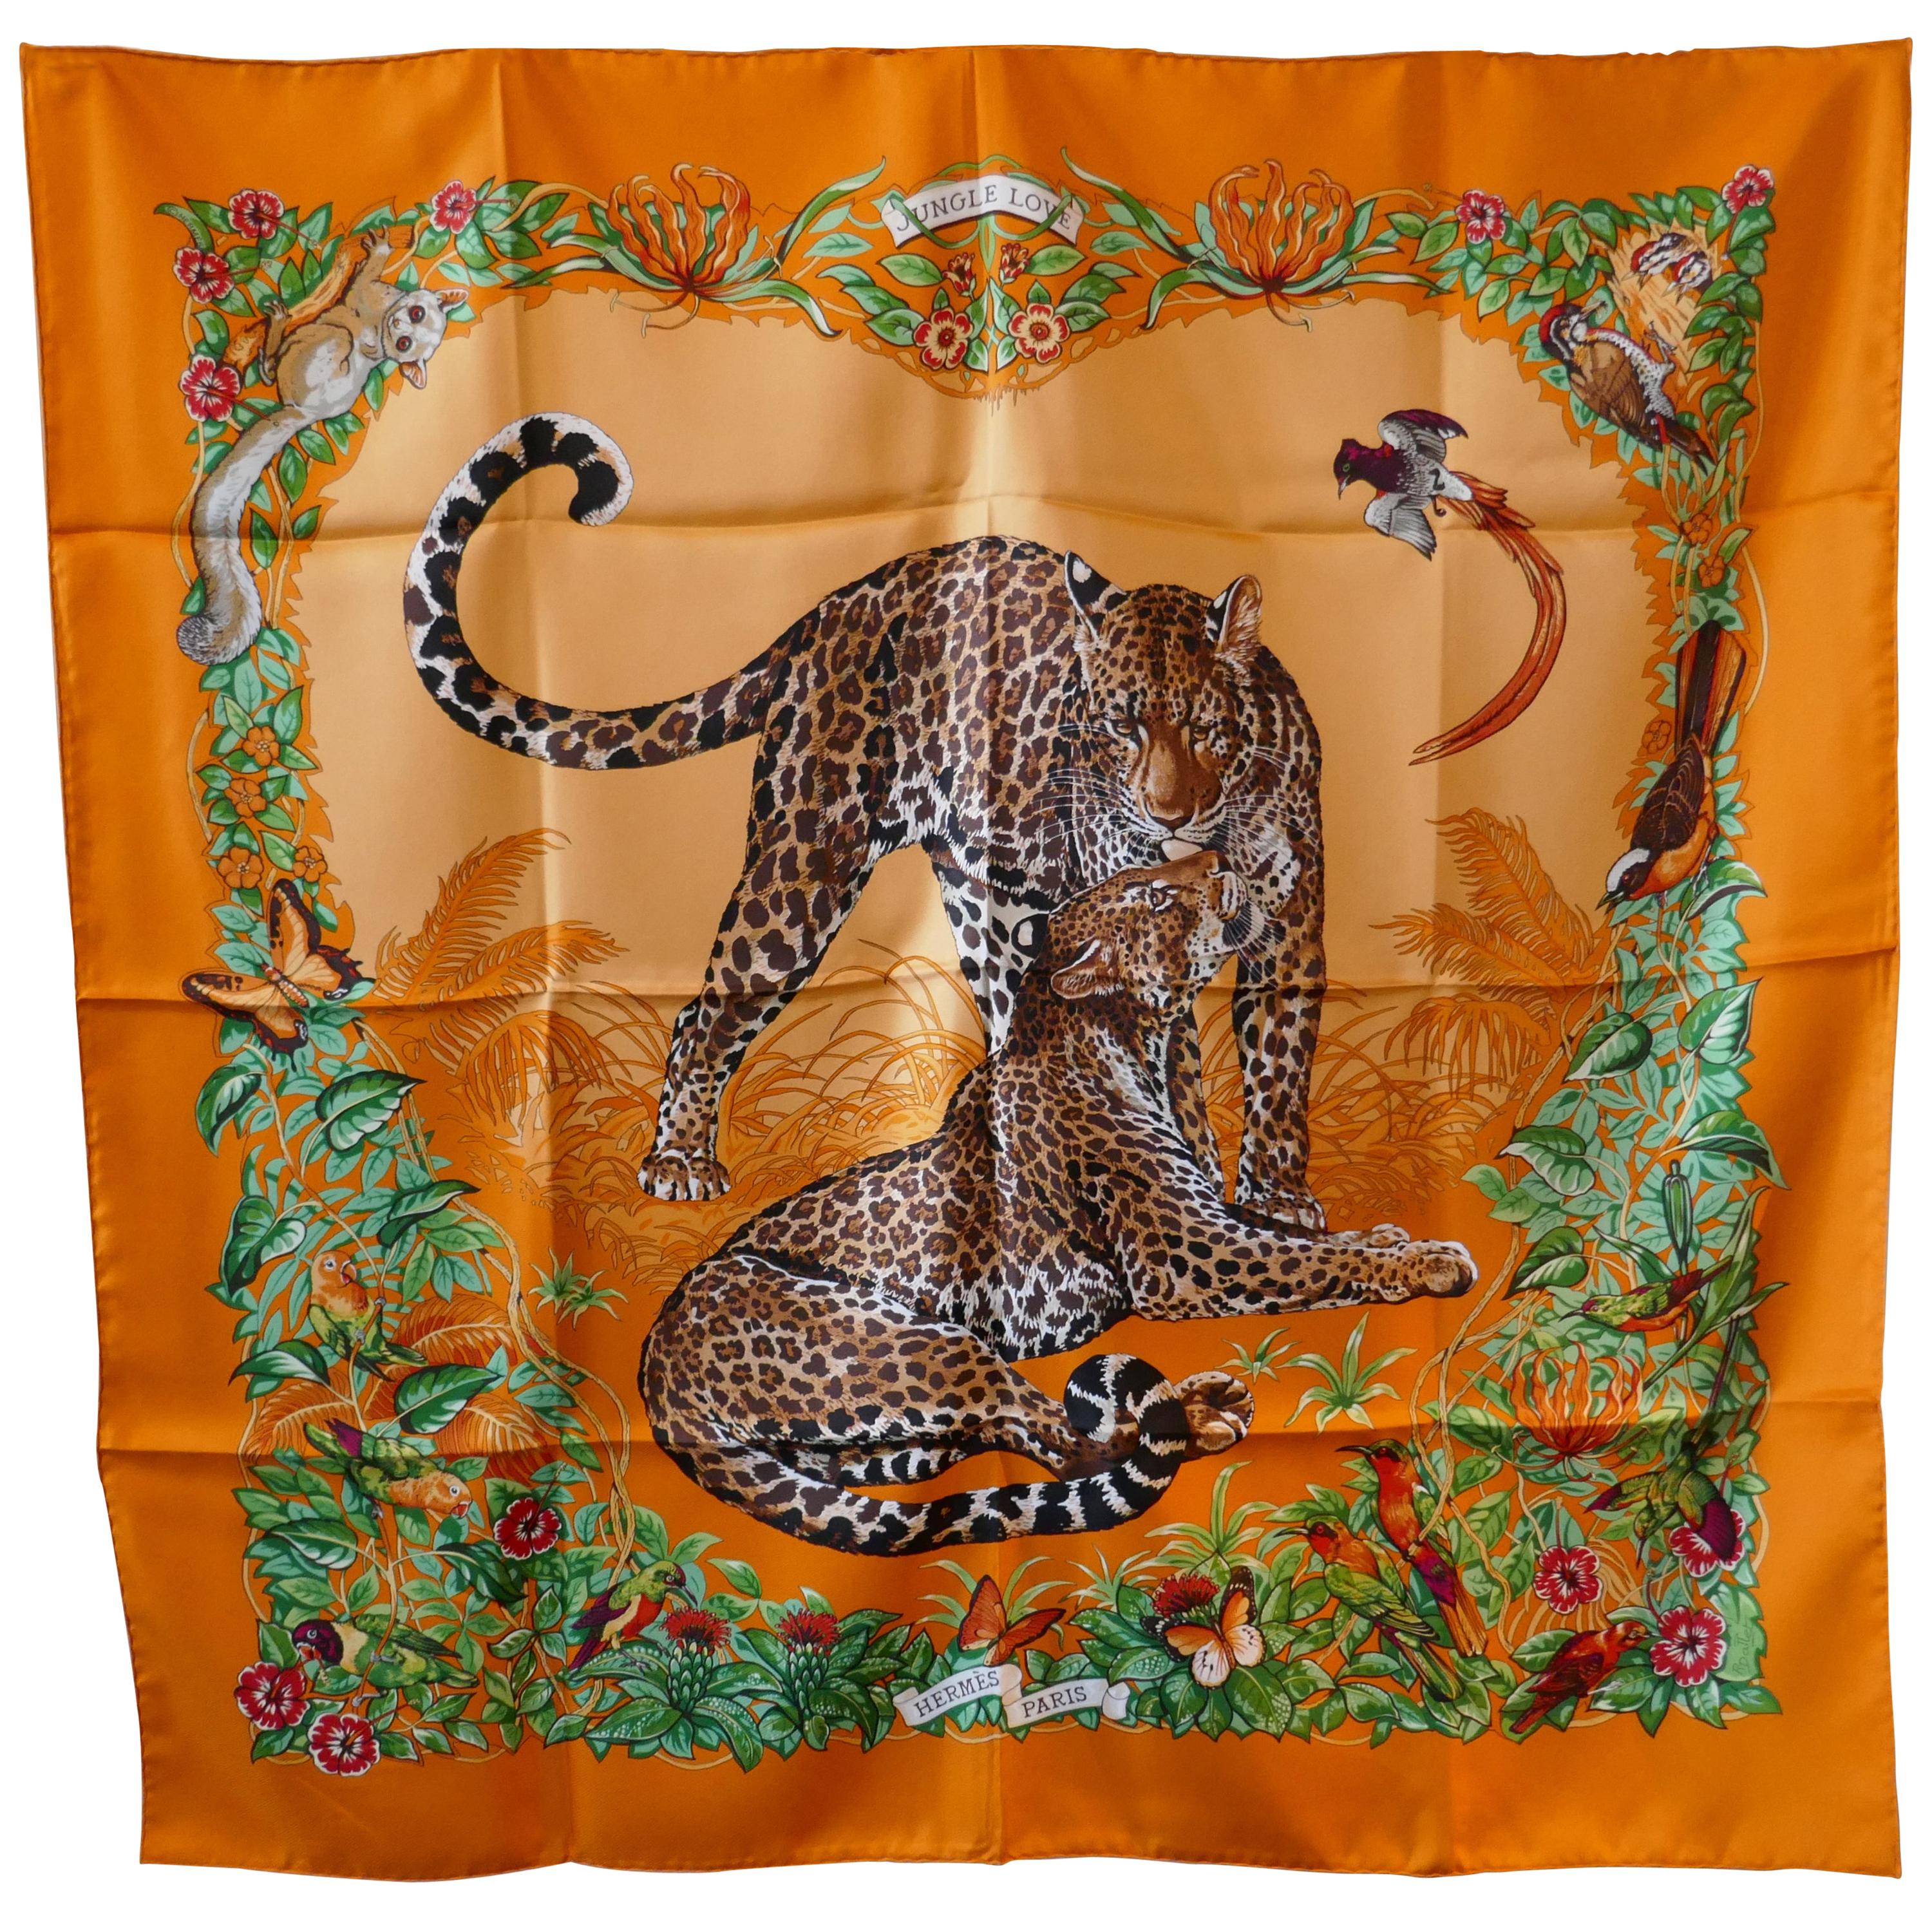 Very Rare Hermes Silk Scarf “Jungle Love” by Robert Dallet, 2000